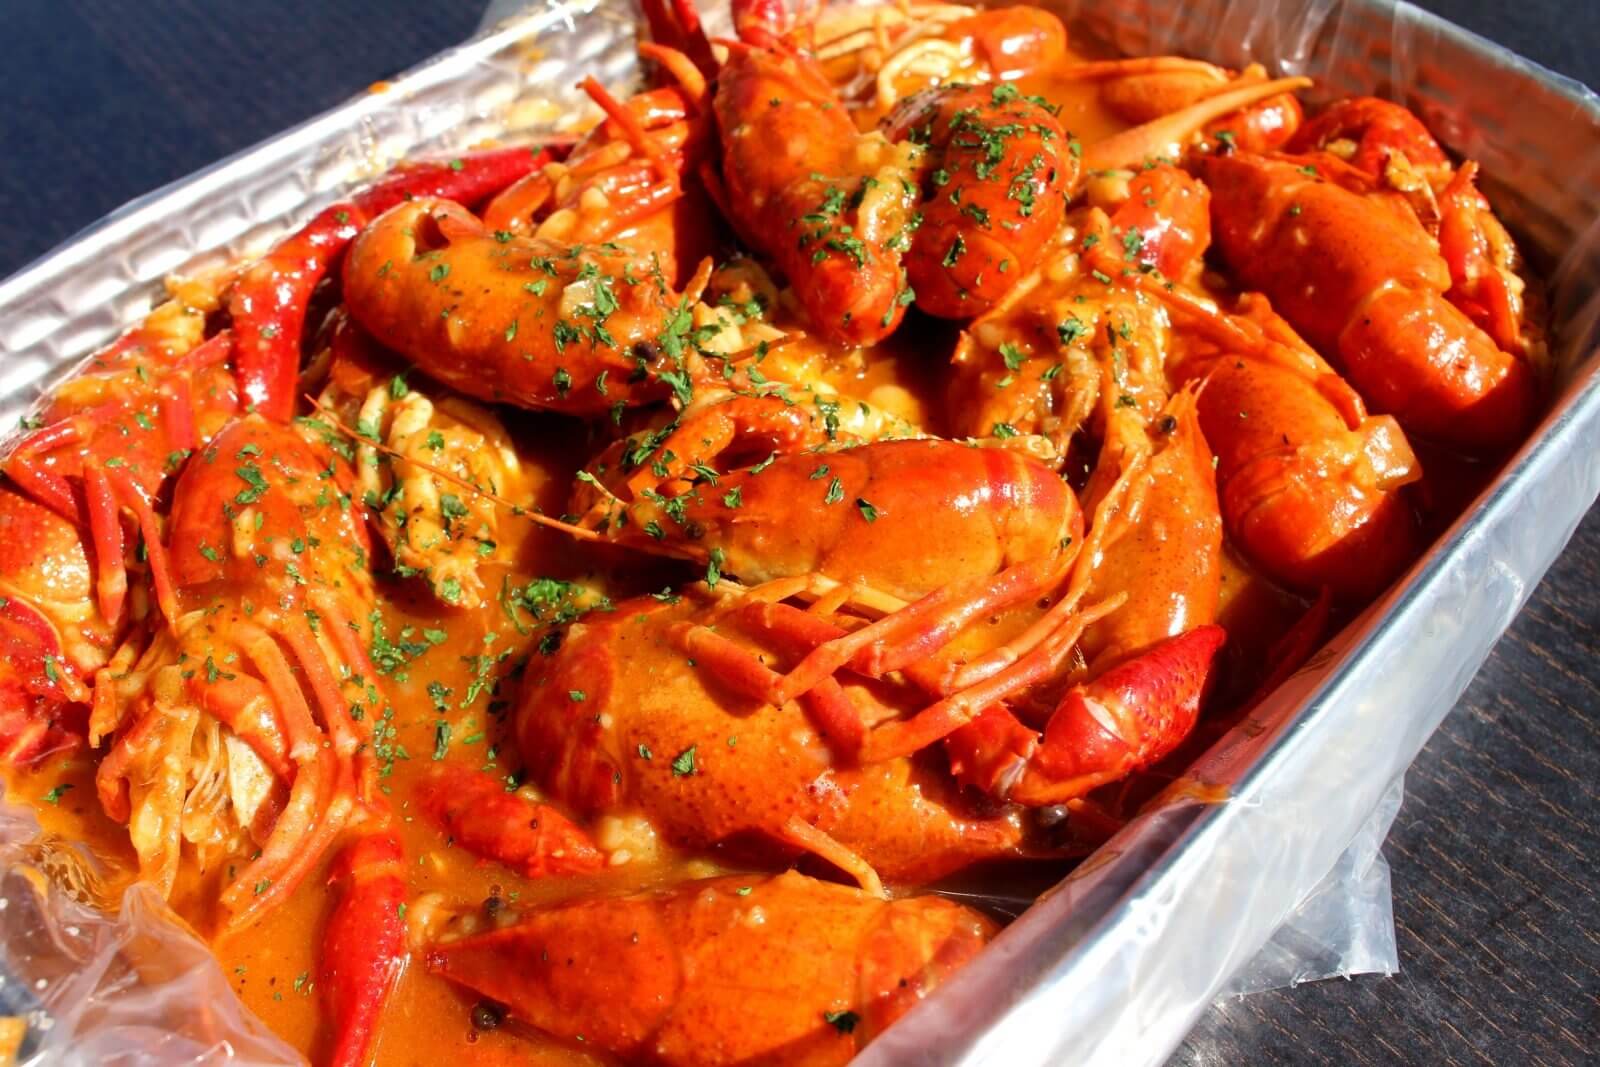 Exquisite cajun boil style shrimp dish.